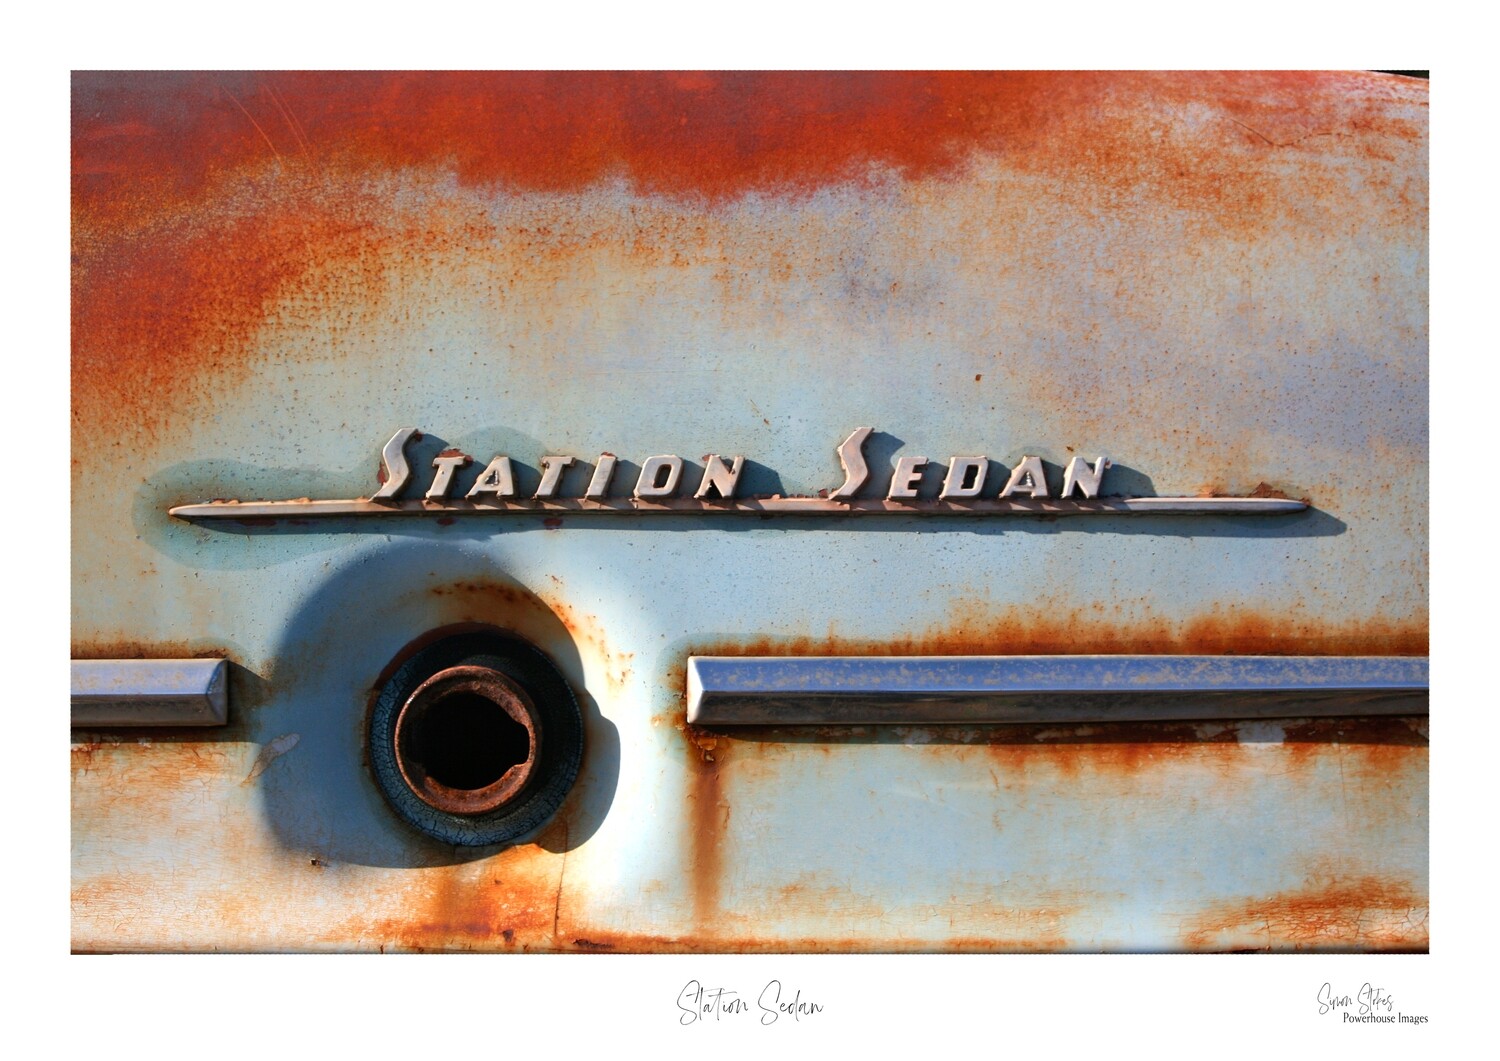 Station Sedan